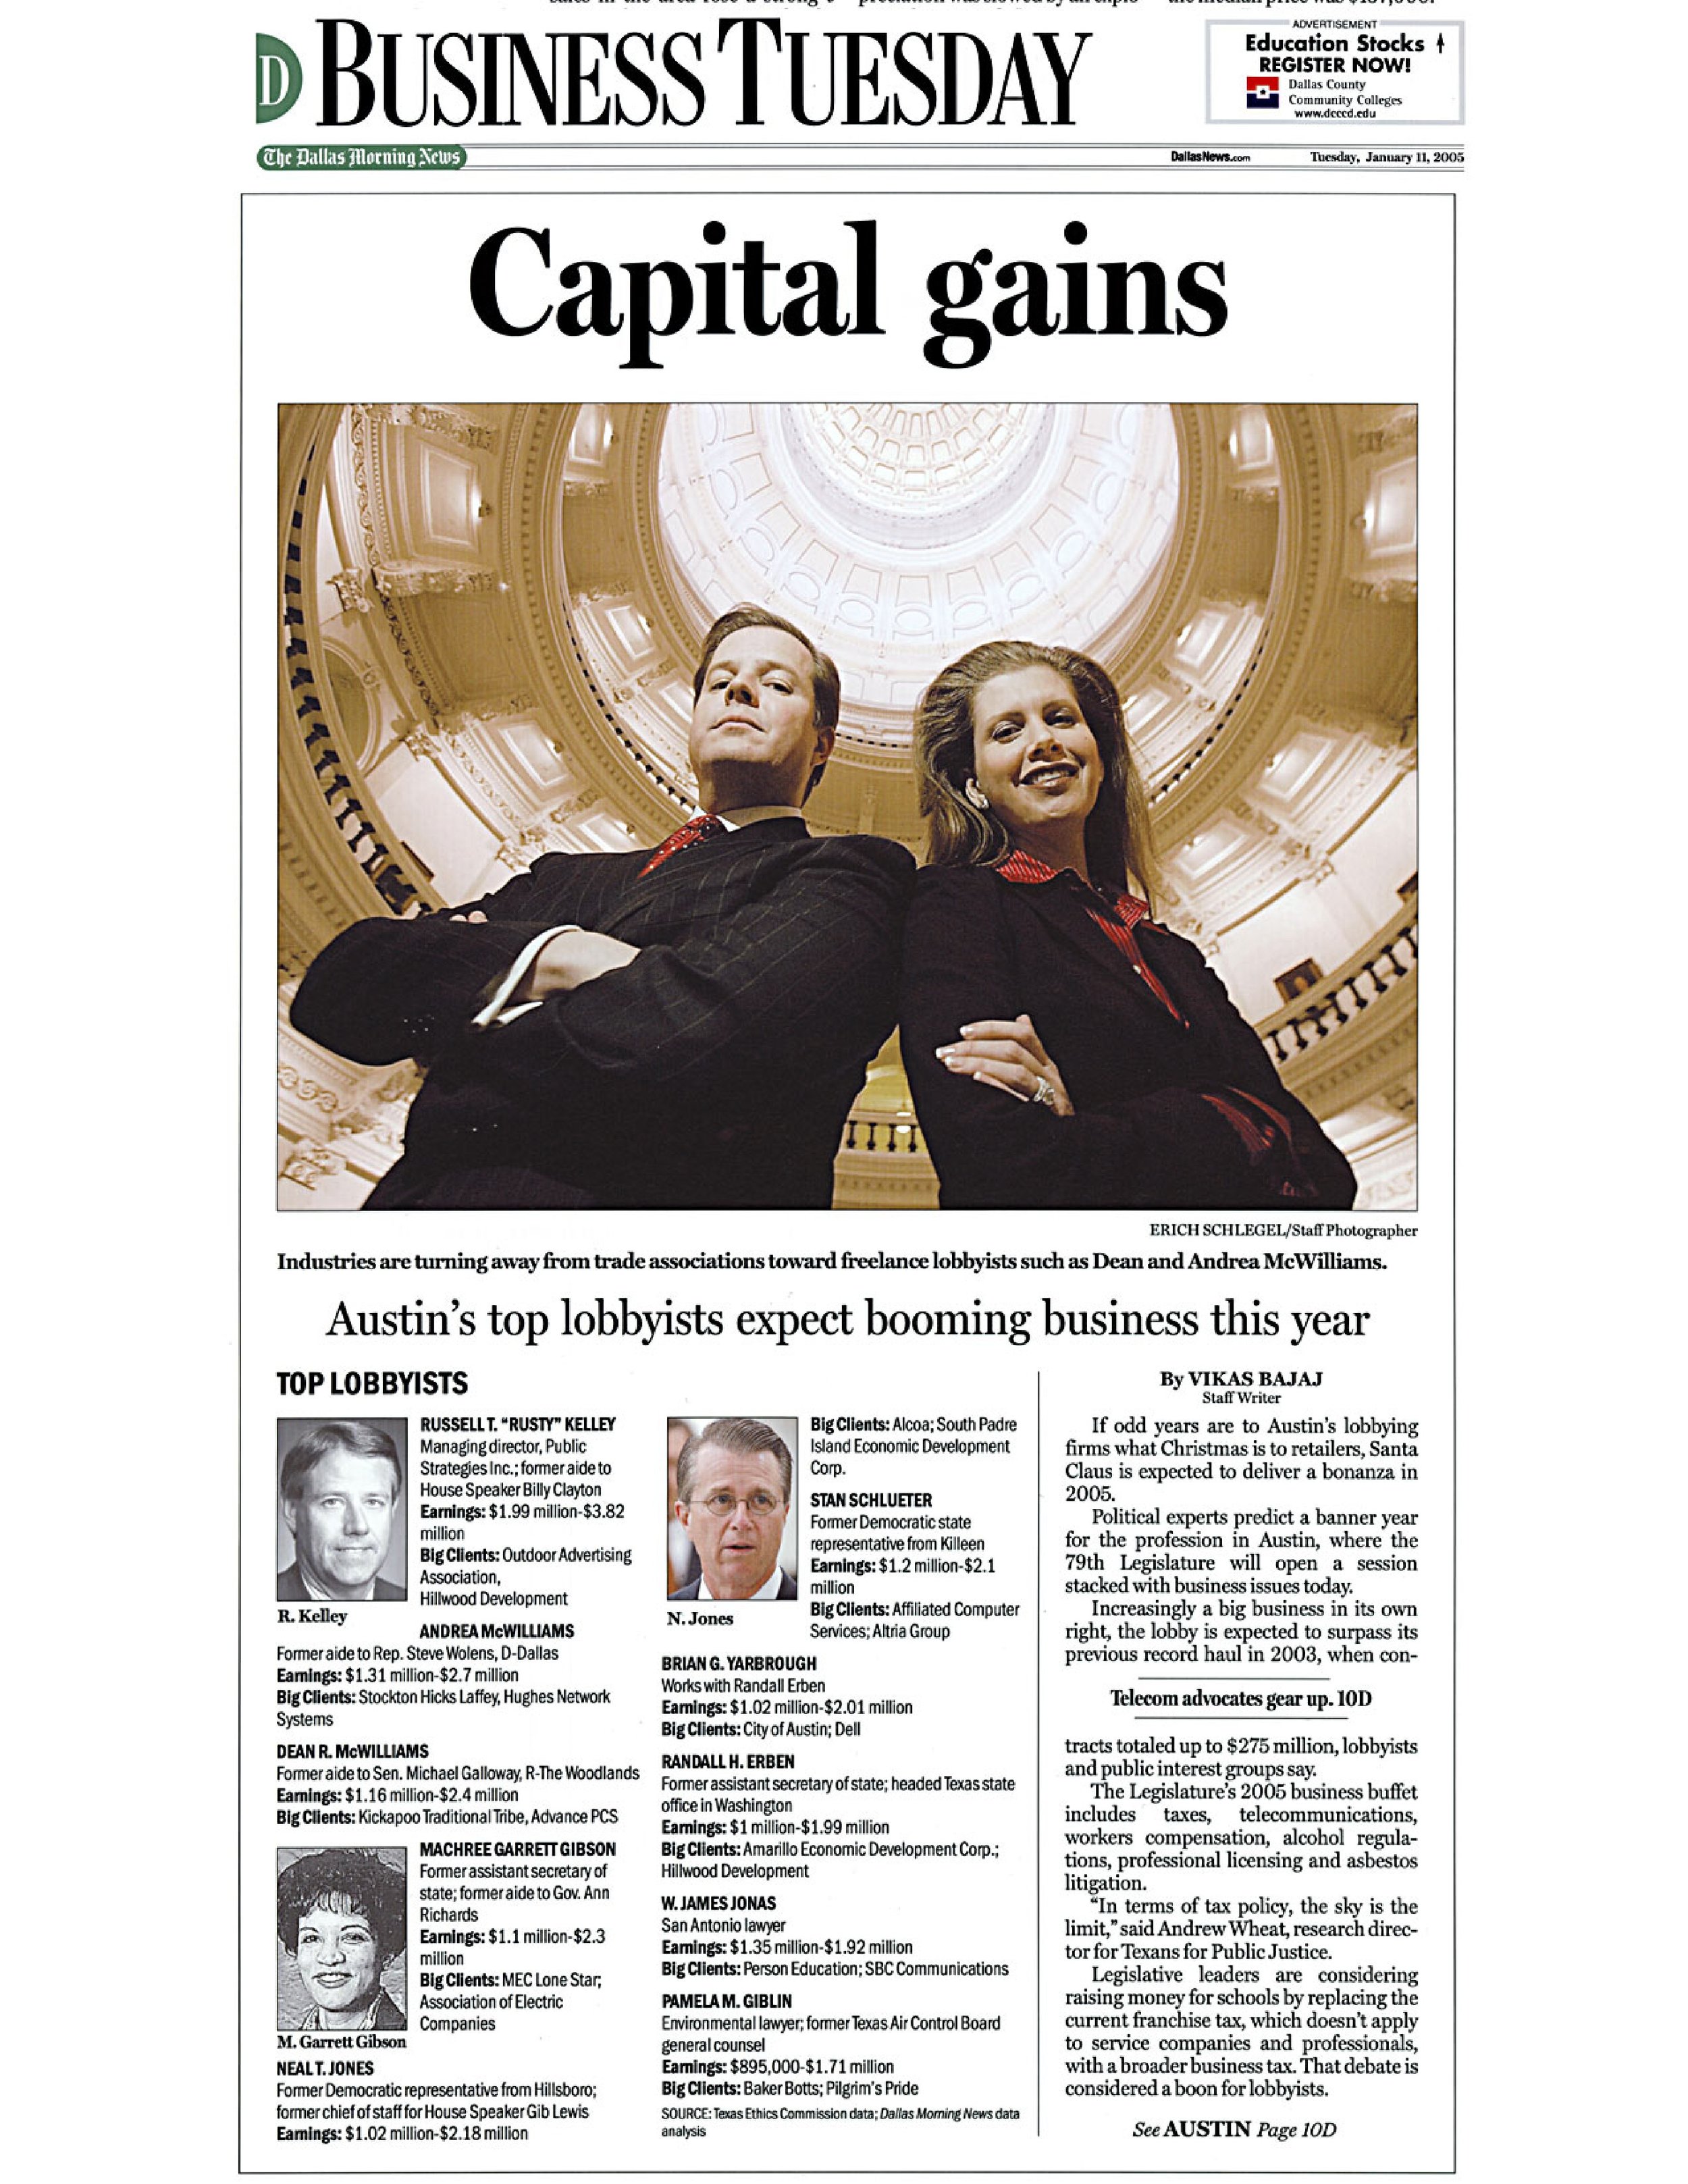 Capital Gains - Dallas Morning News